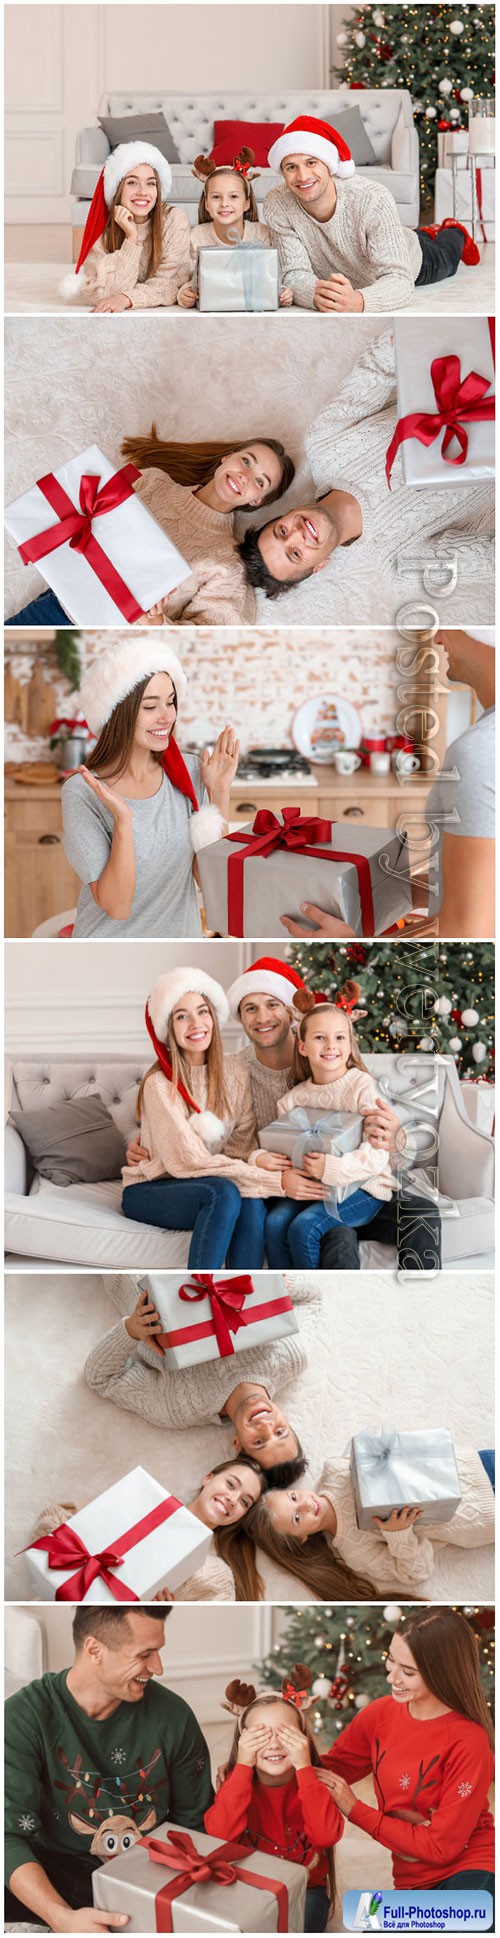 Happy family at Christmas